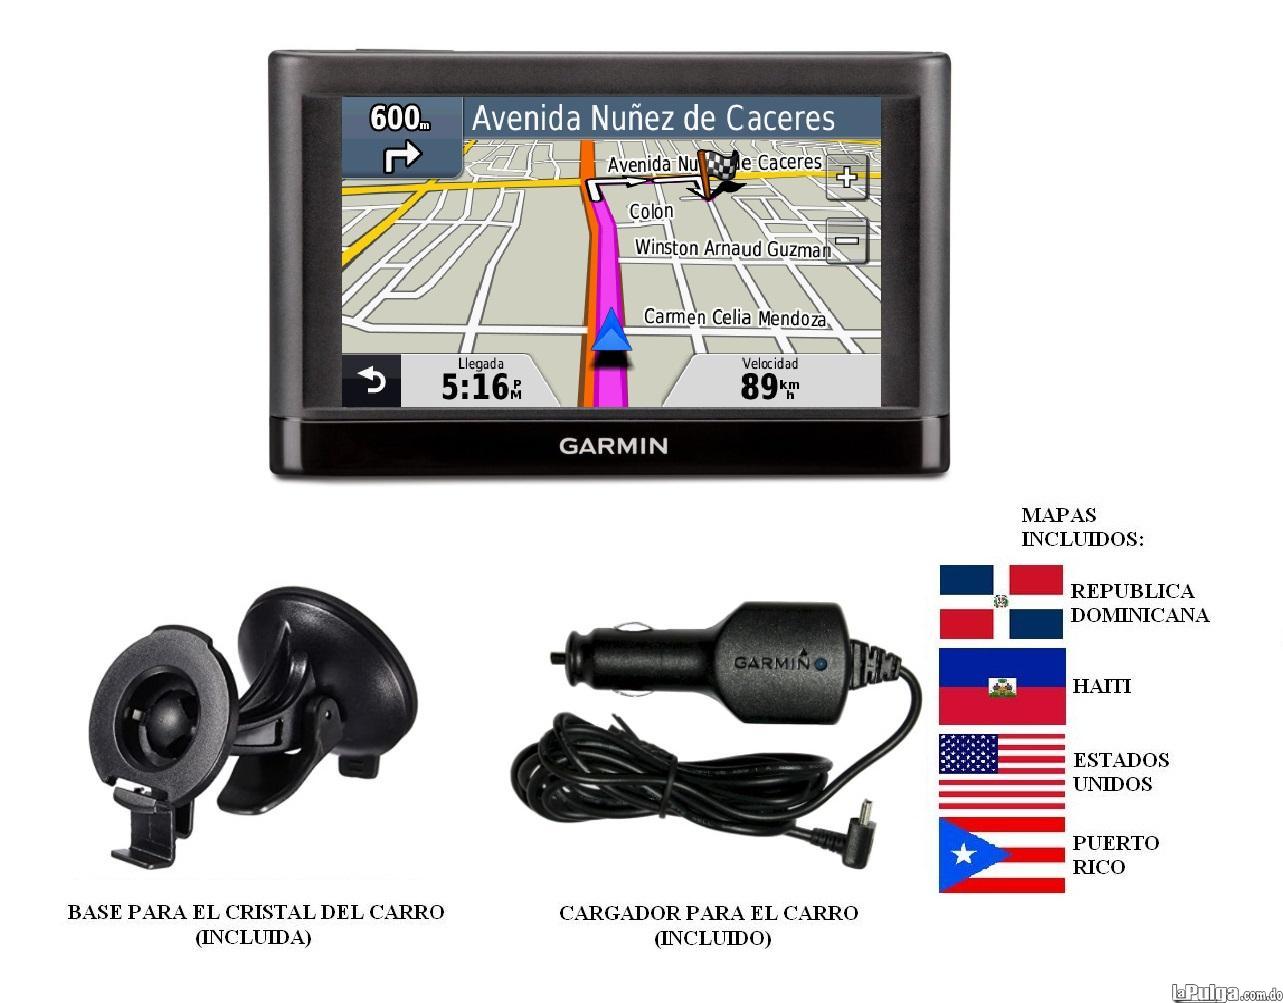 GPS Navegador Garmin Nuvi 42LM Con Mapa RD Haiti USA y PR Foto 7139992-1.jpg